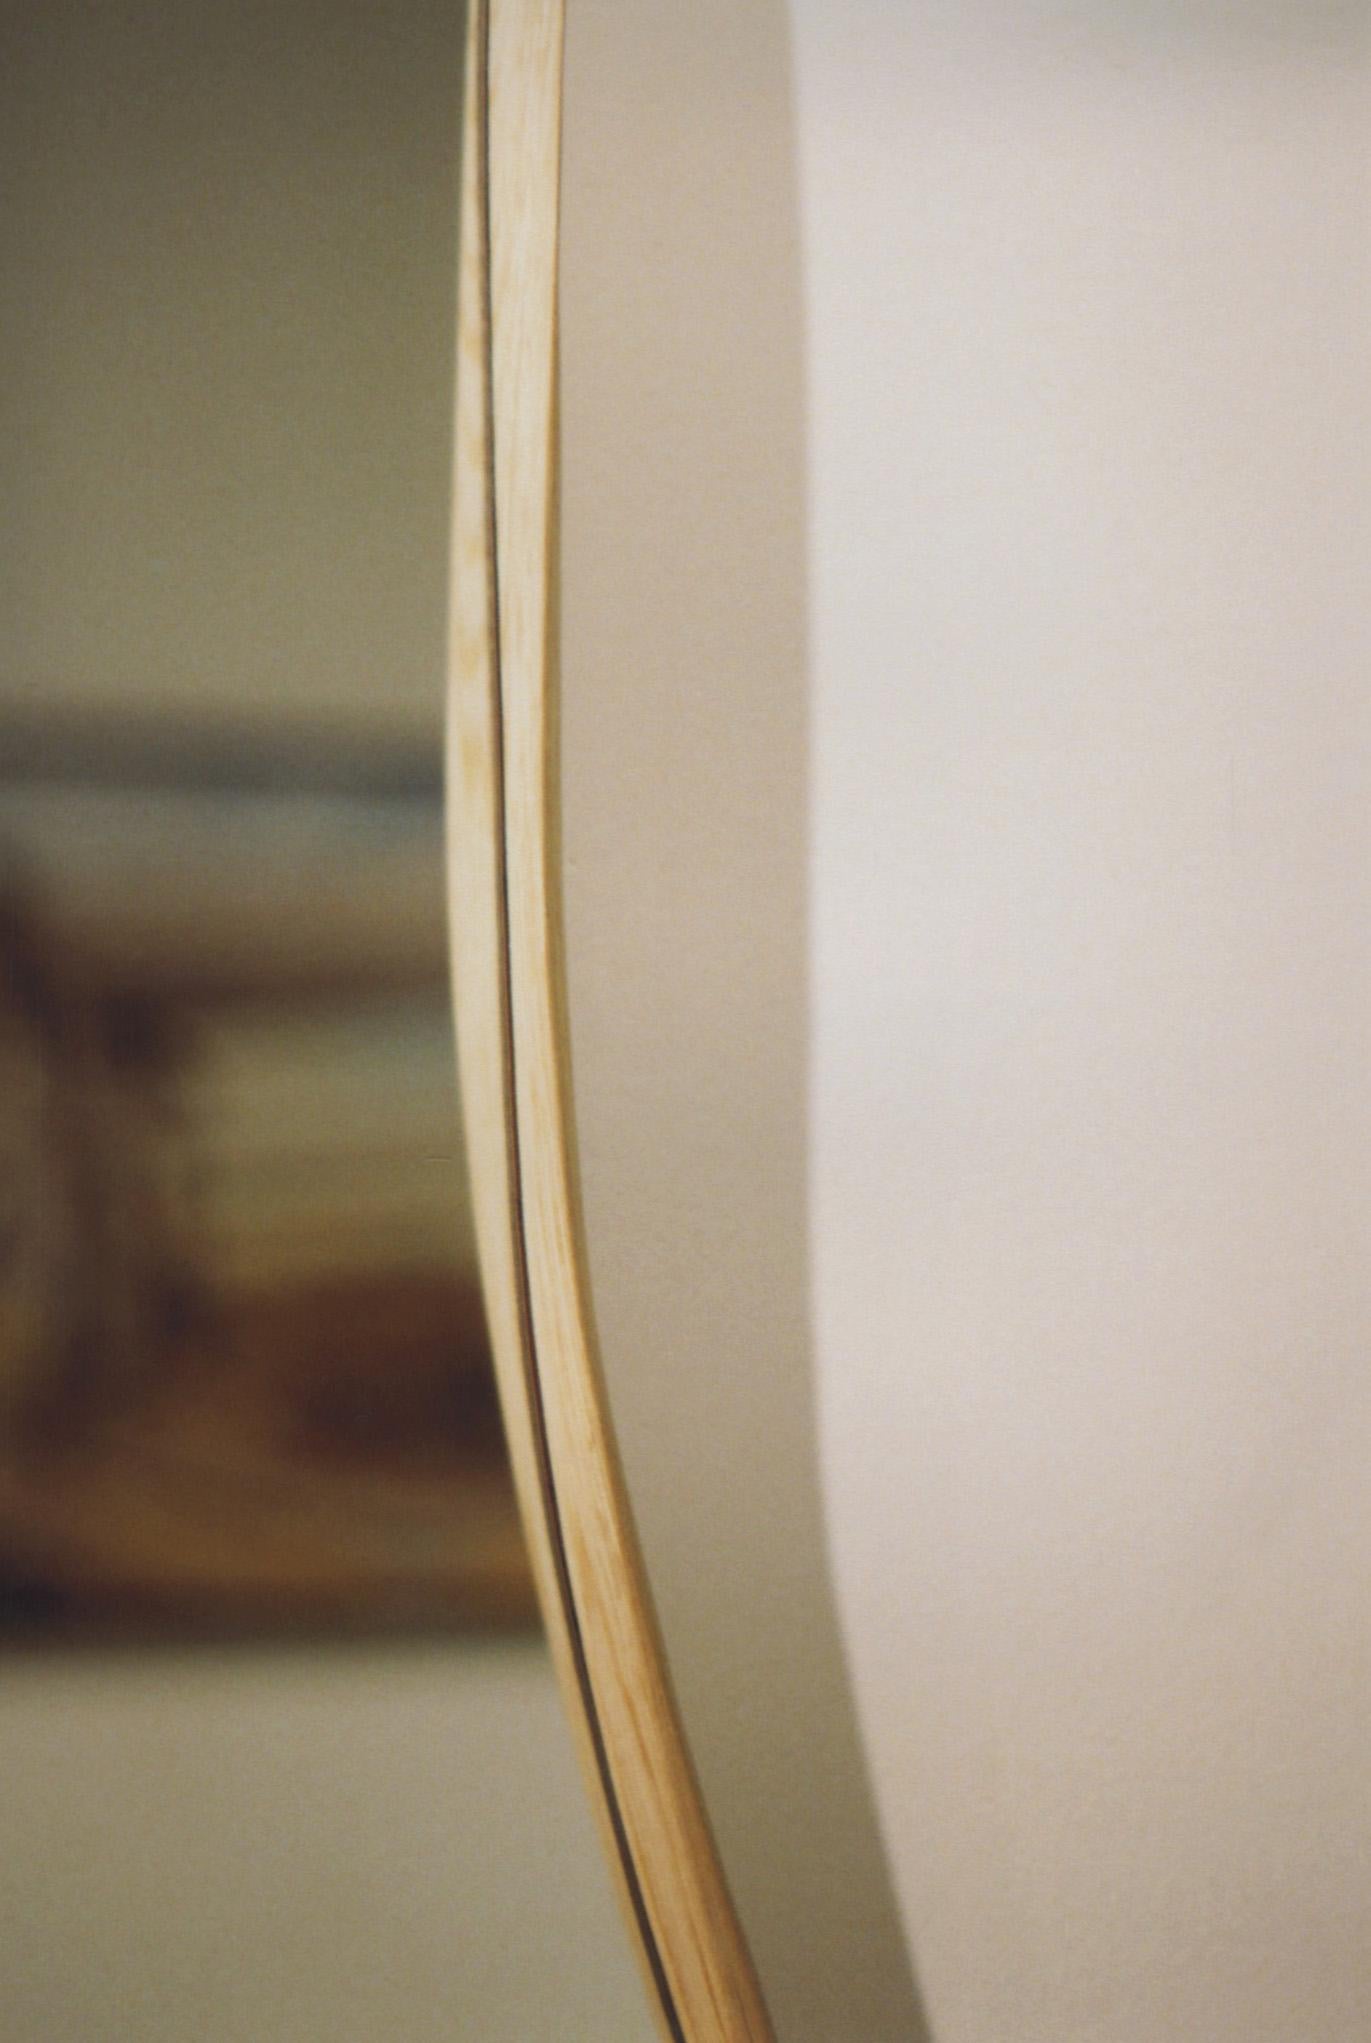 Woodwork Asymmetric, Organic Wall Mirror, Bent-lamination 'Momentum Mirror' by Soo Joo  For Sale